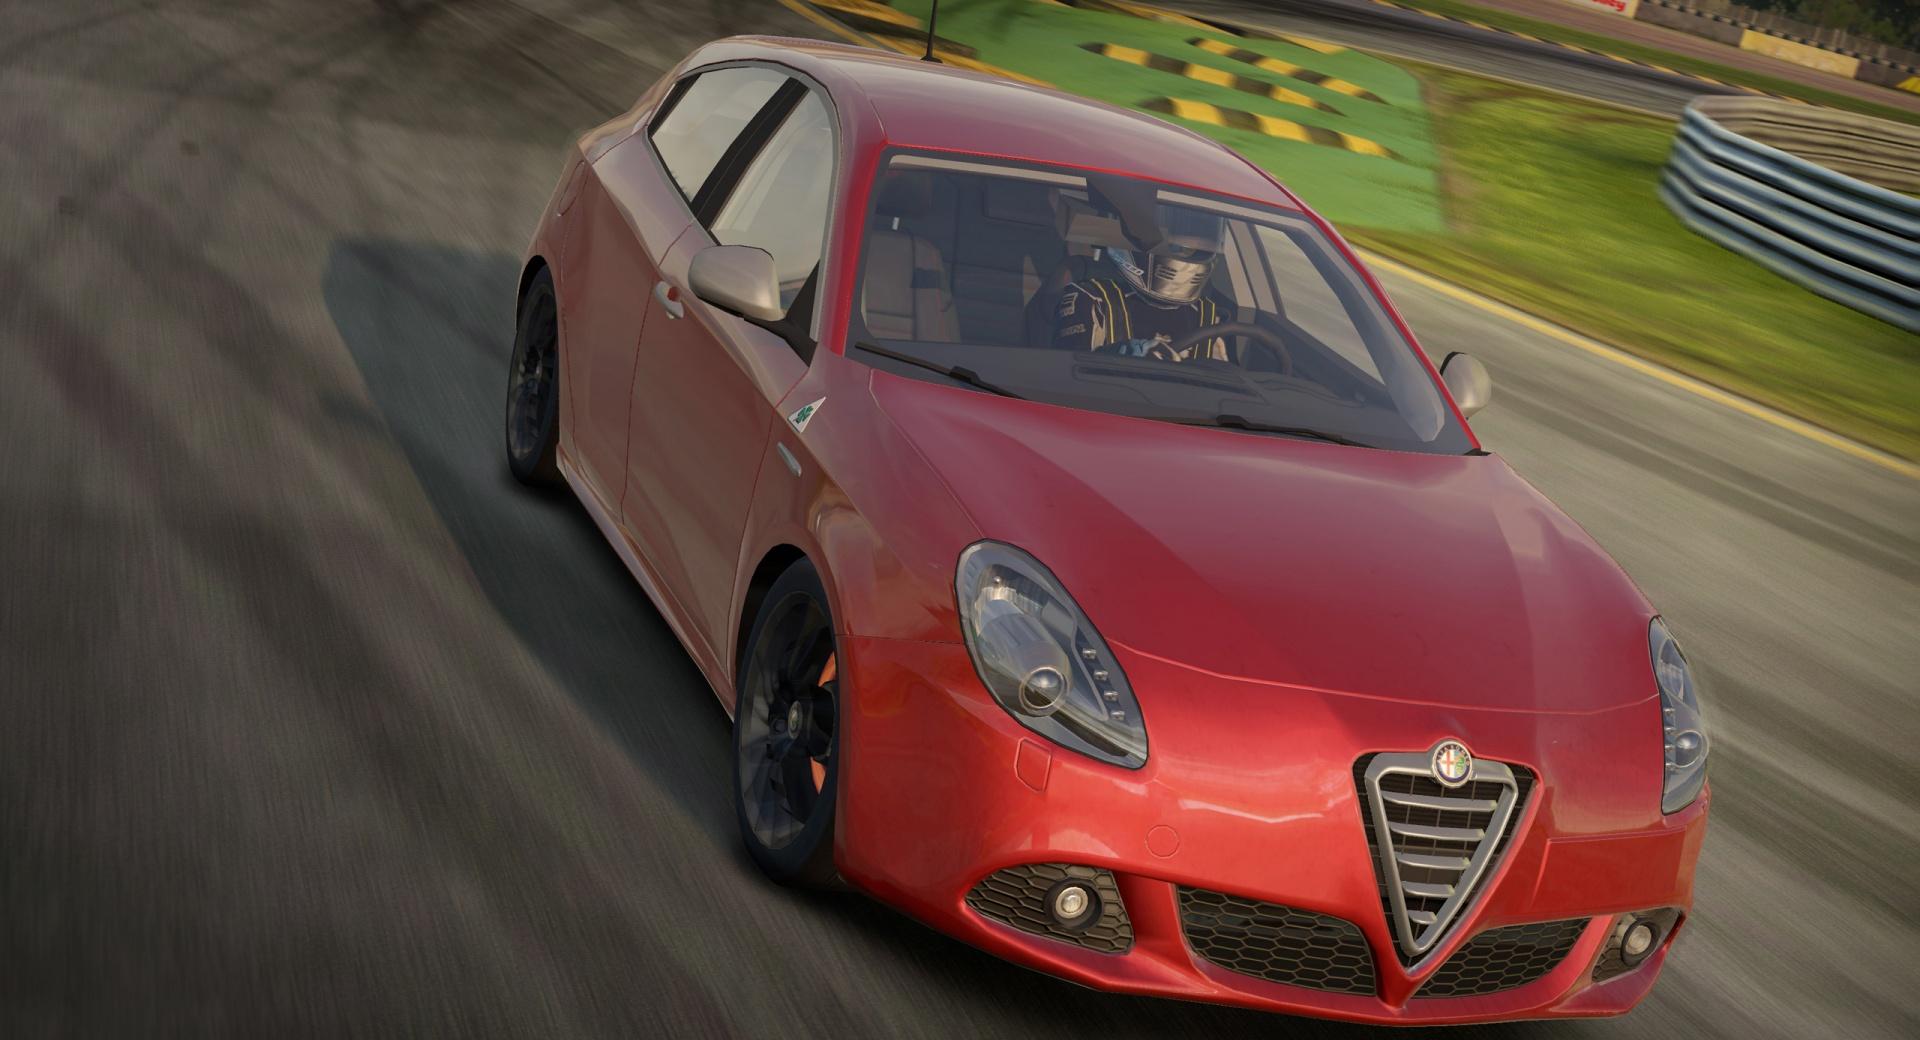 Need For Speed Shift 2, Alfa Romeo Giulietta Qv at 1024 x 1024 iPad size wallpapers HD quality